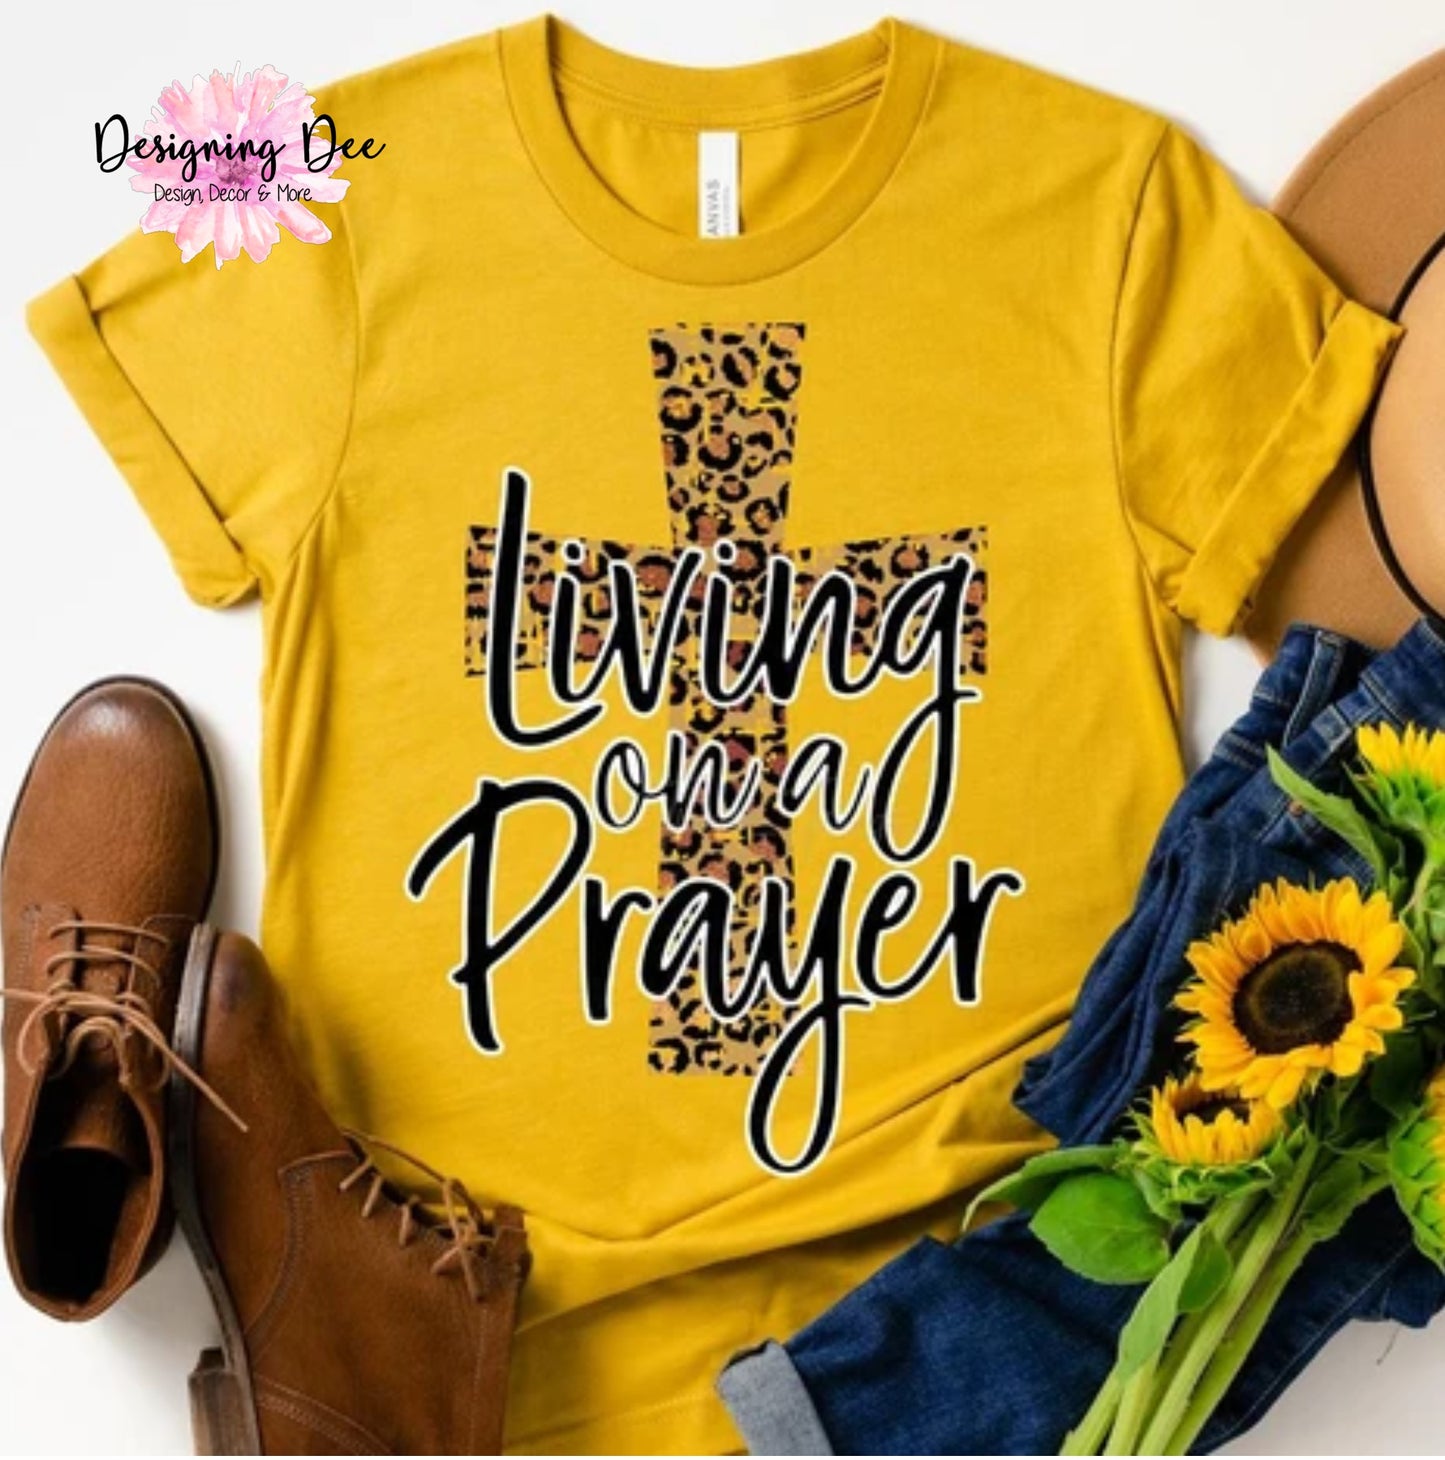 Living On A Prayer Graphic T-shirt